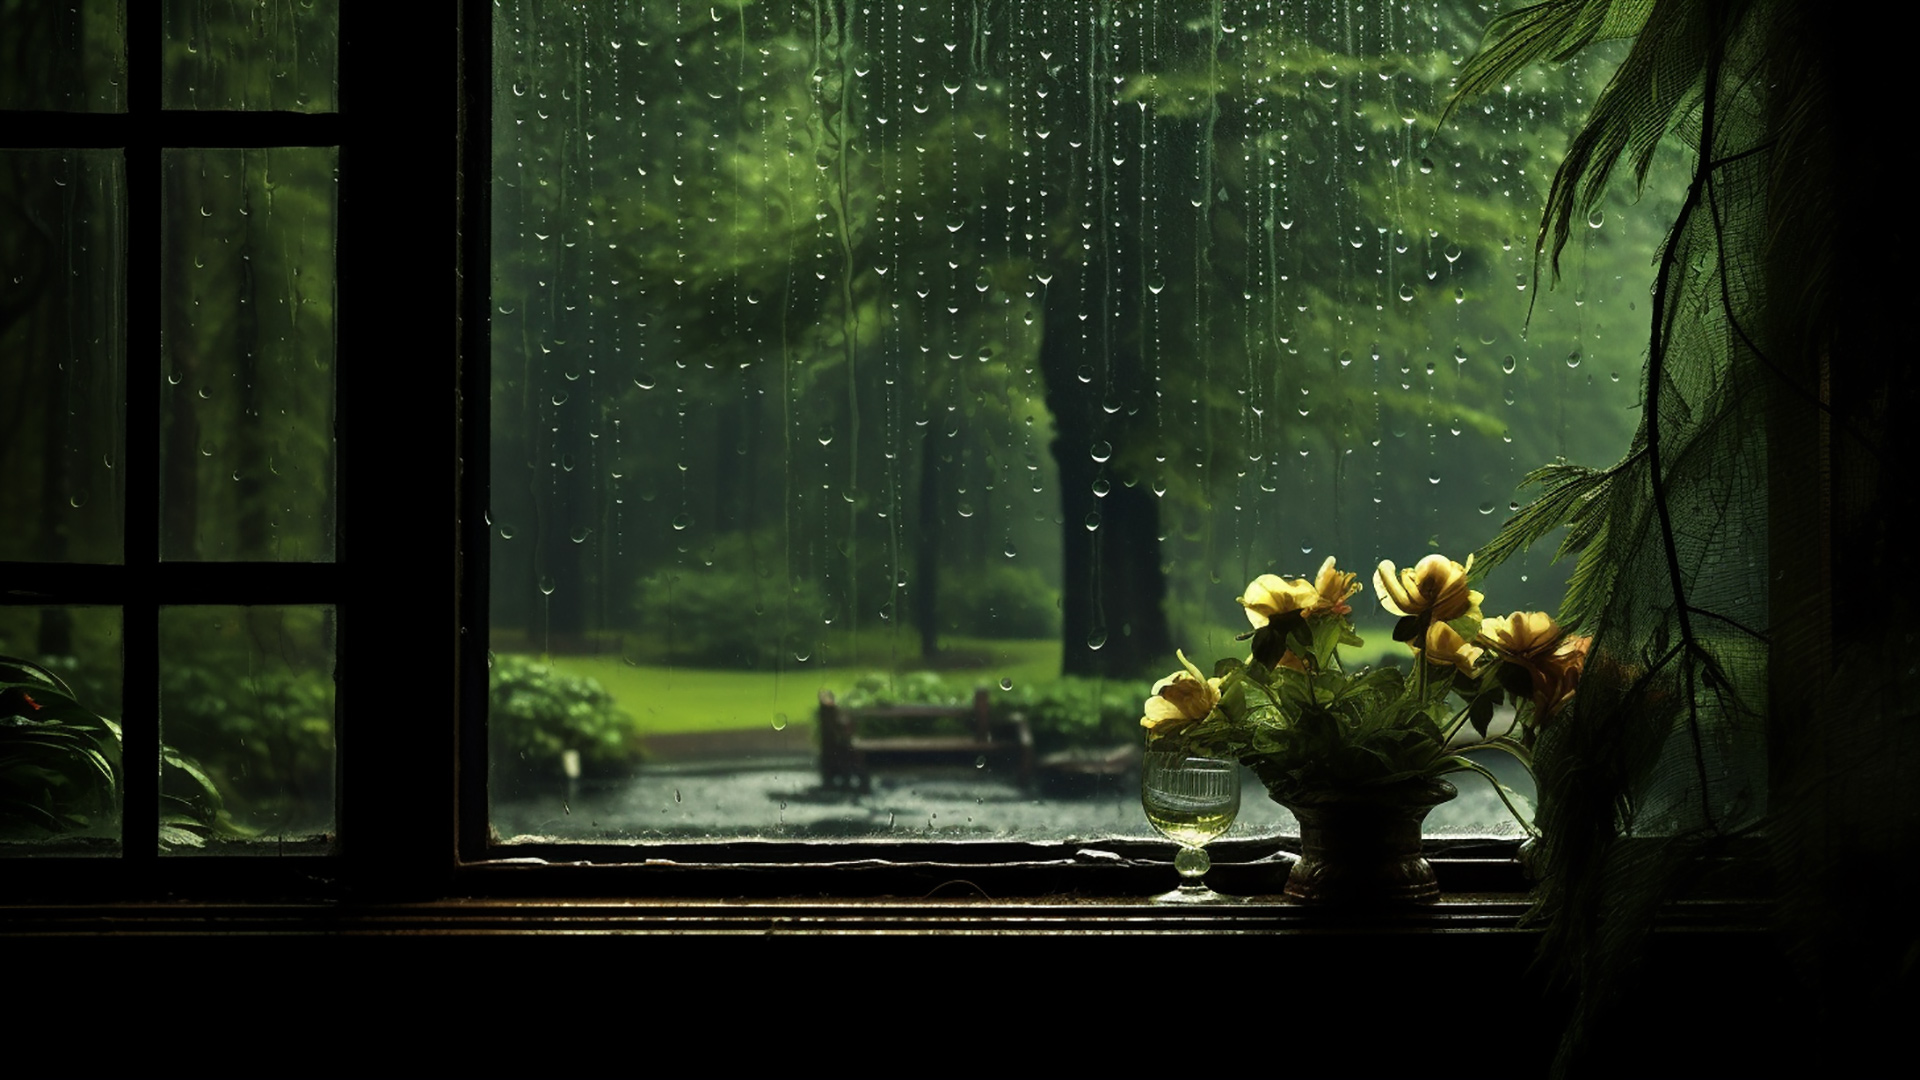 HD Raindrop artistry: Detailed rainy window scenes for desktops